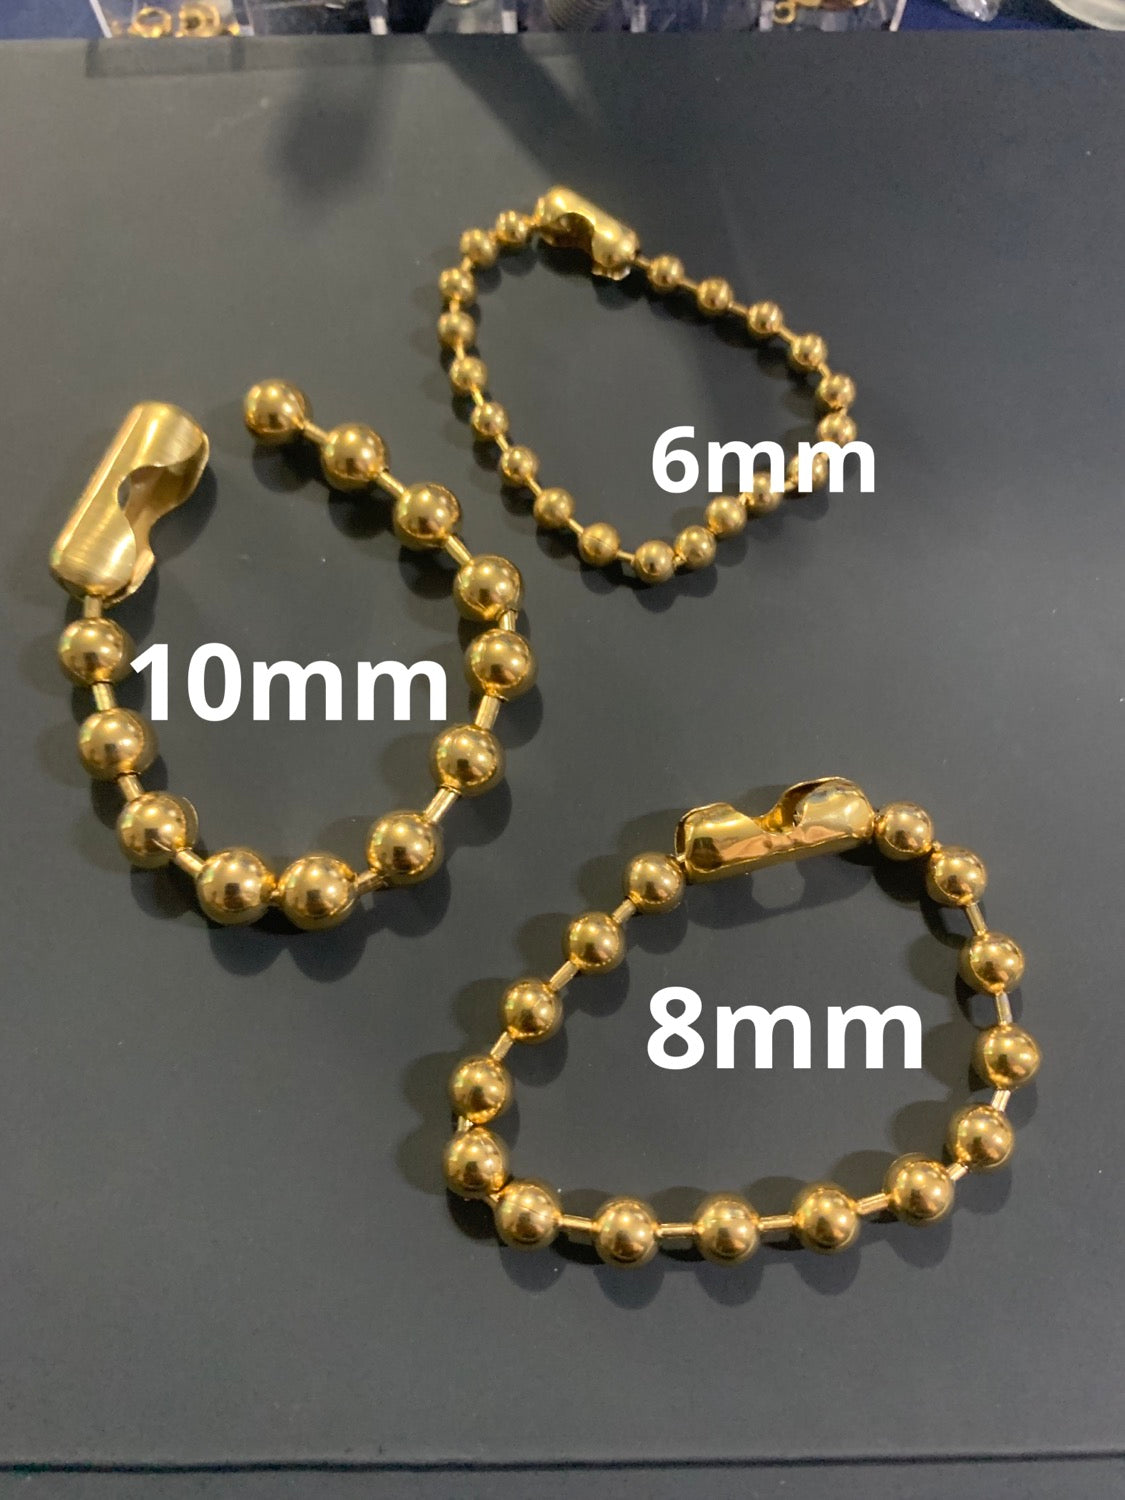 7” Pulsera cadena bolita/ ball chain bracelet 21410,21411,21412